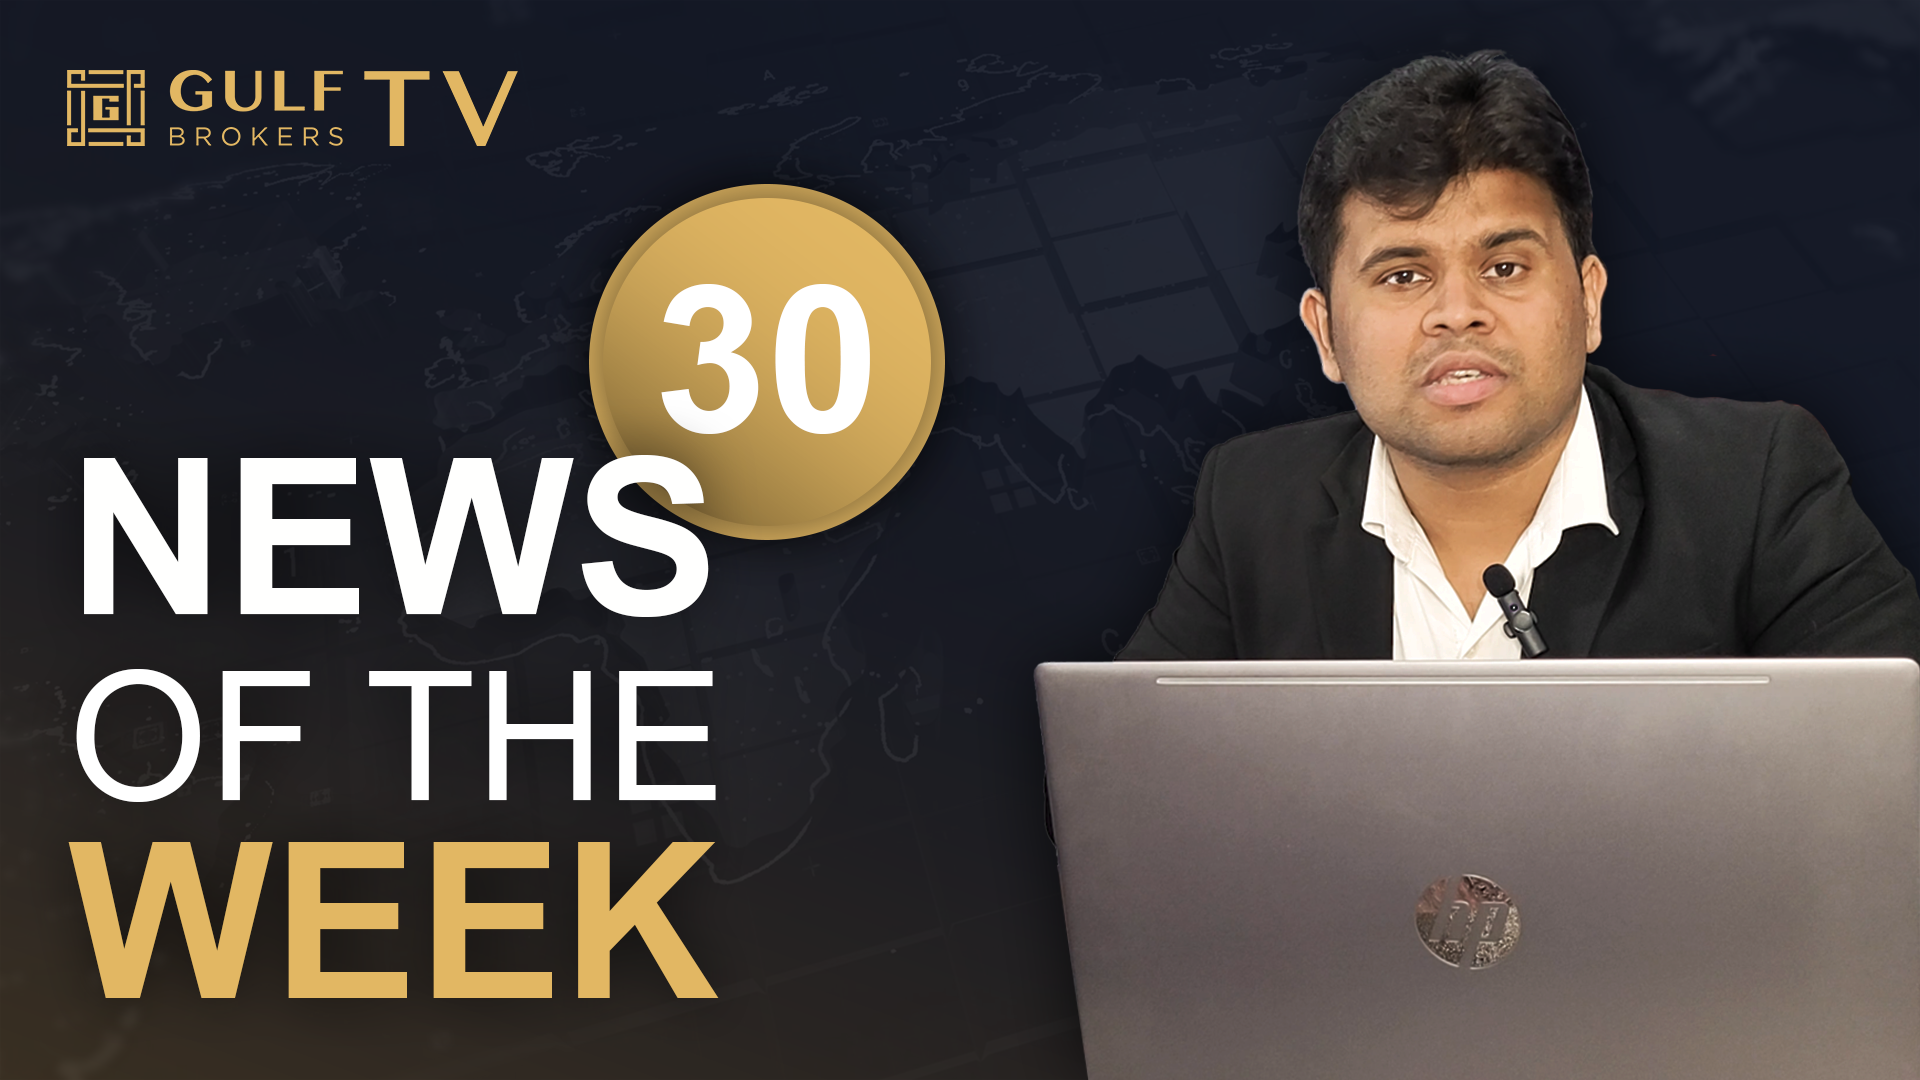 Gulfbrokers | Gulf Brokers | News of the week 30 | Syam KP